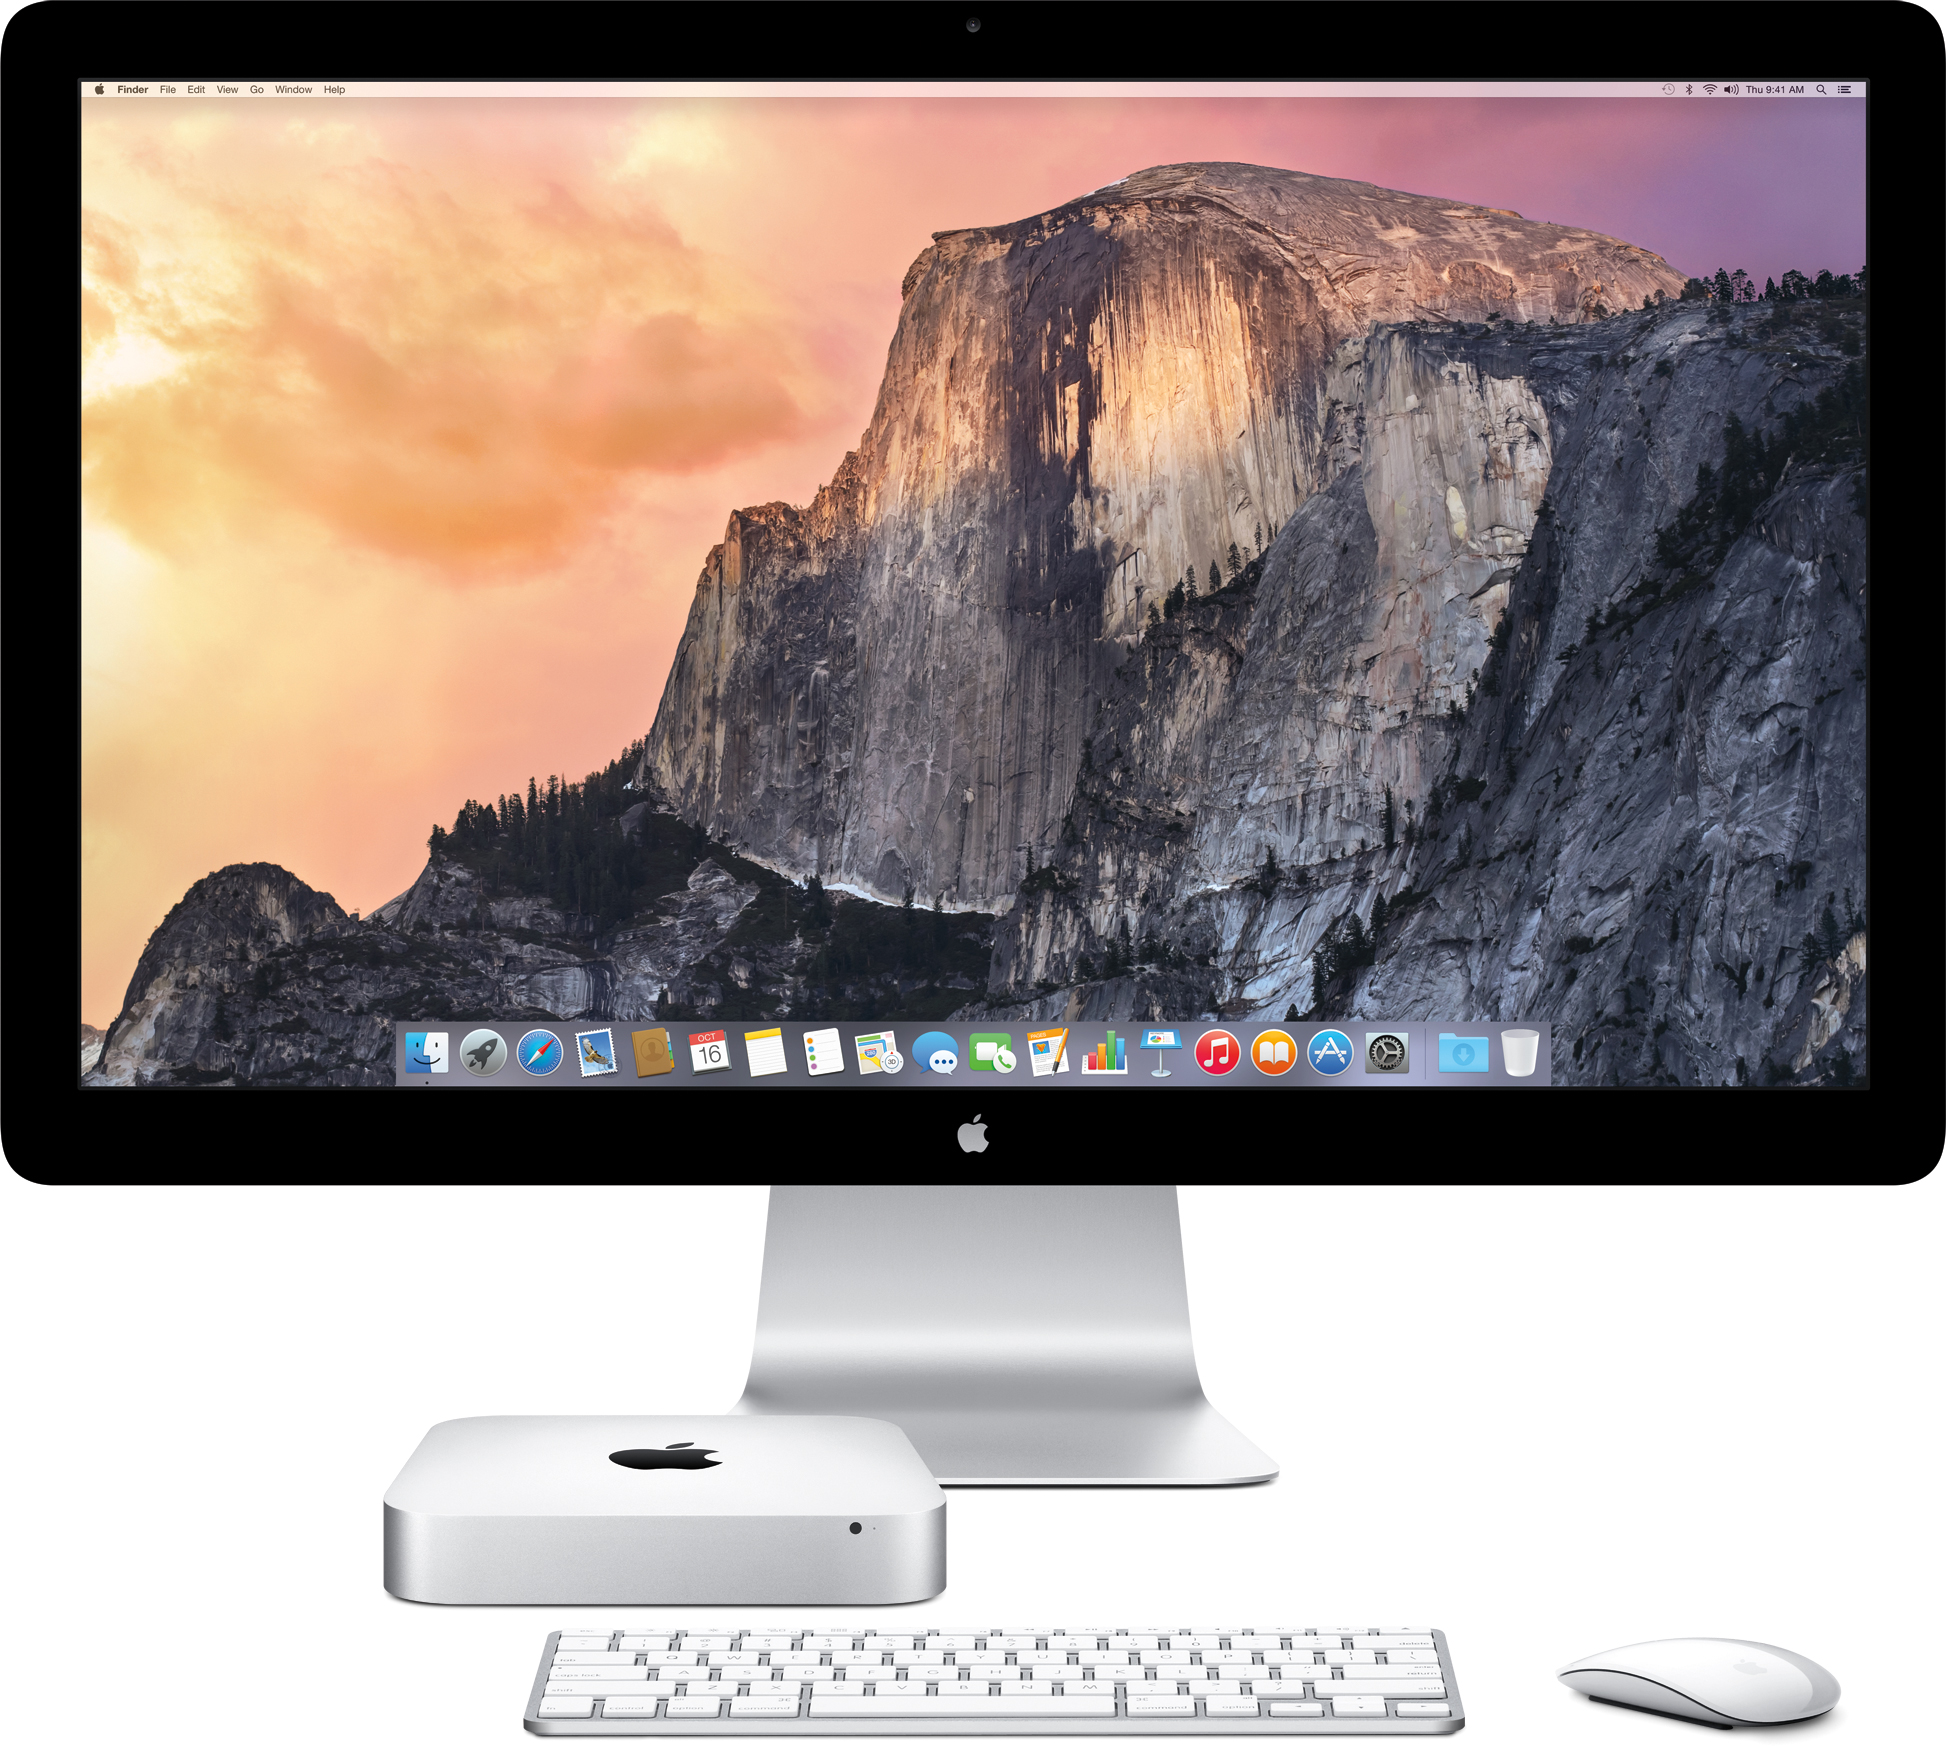 Mini Mac baru dari depan dengan Thunderbolt Display, keyboard, dan mouse